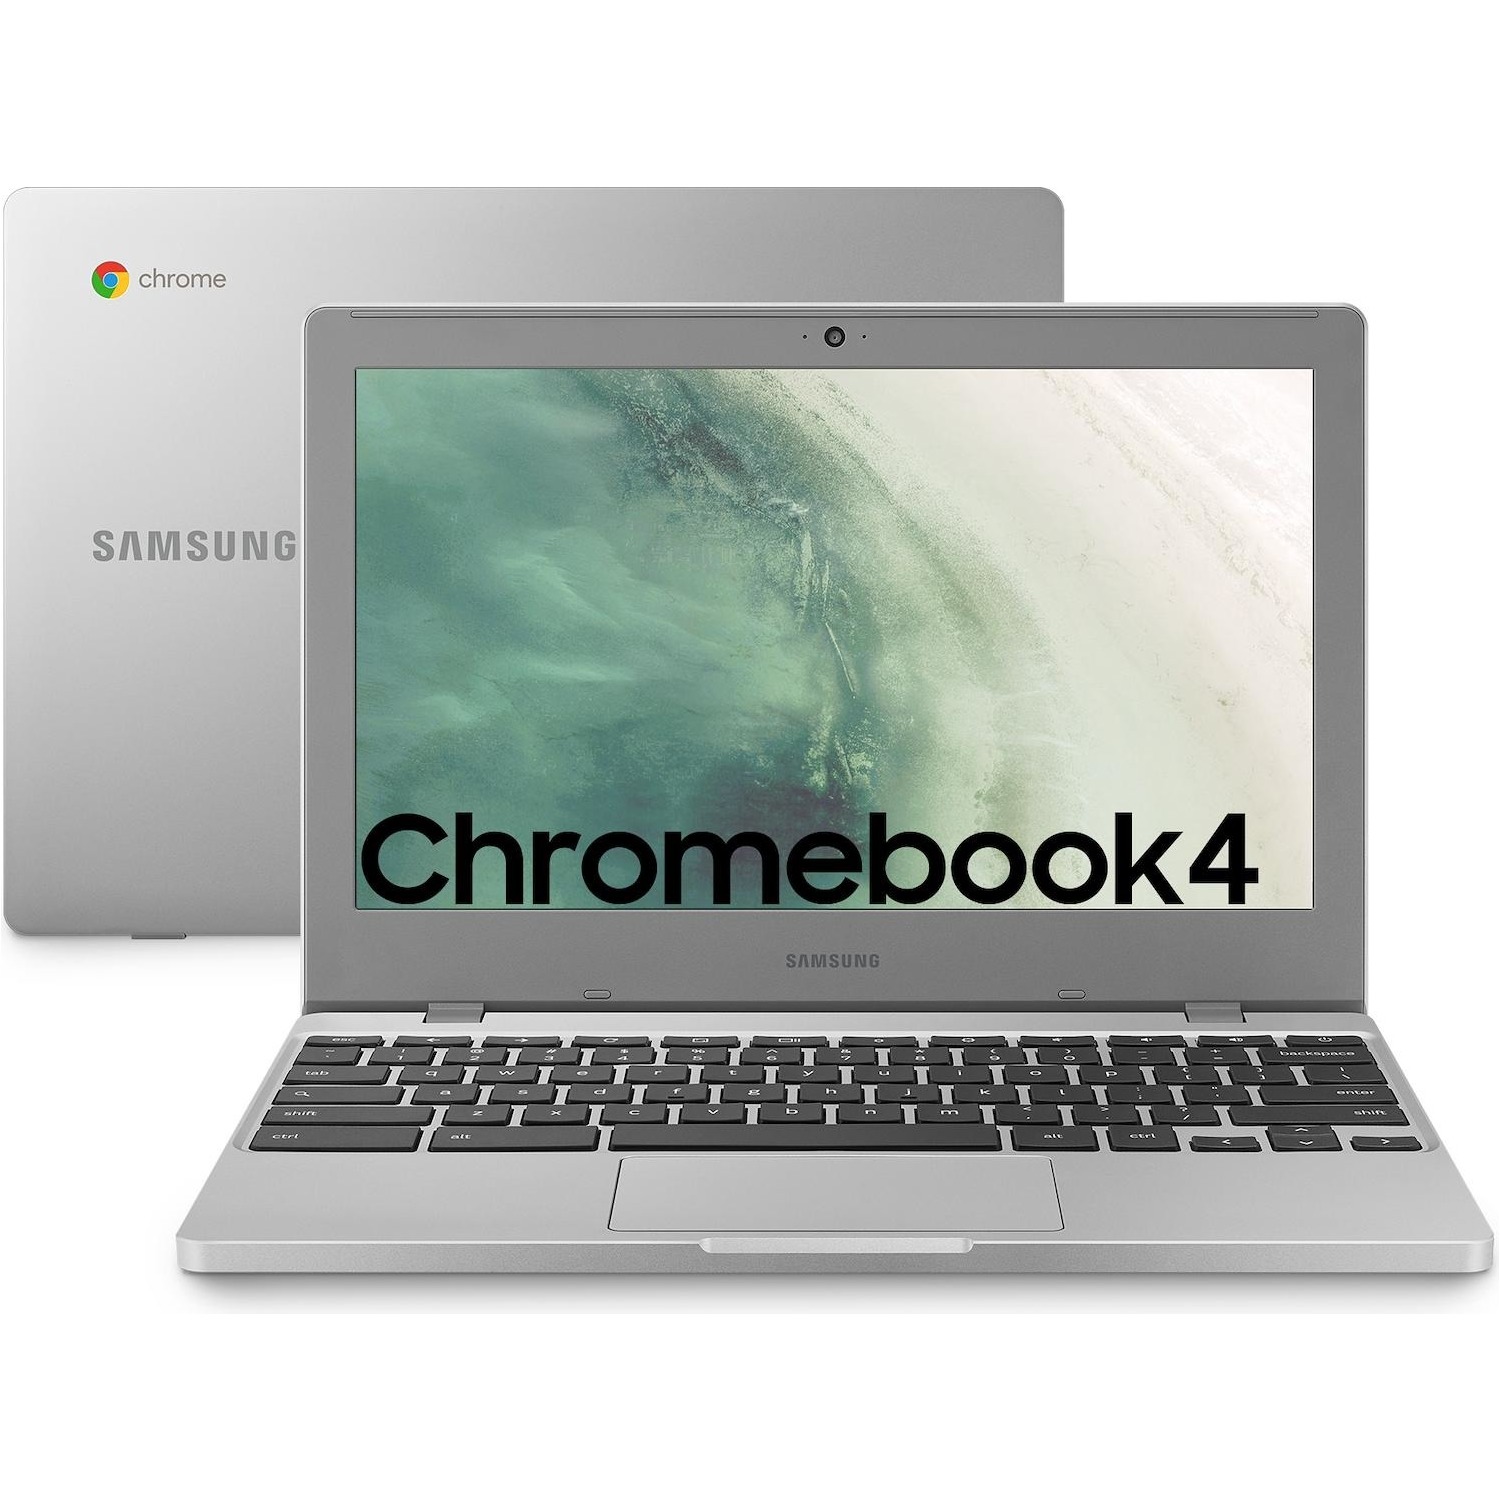 Immagine per Notebook Samsung Chromebook 4 titanio da DIMOStore